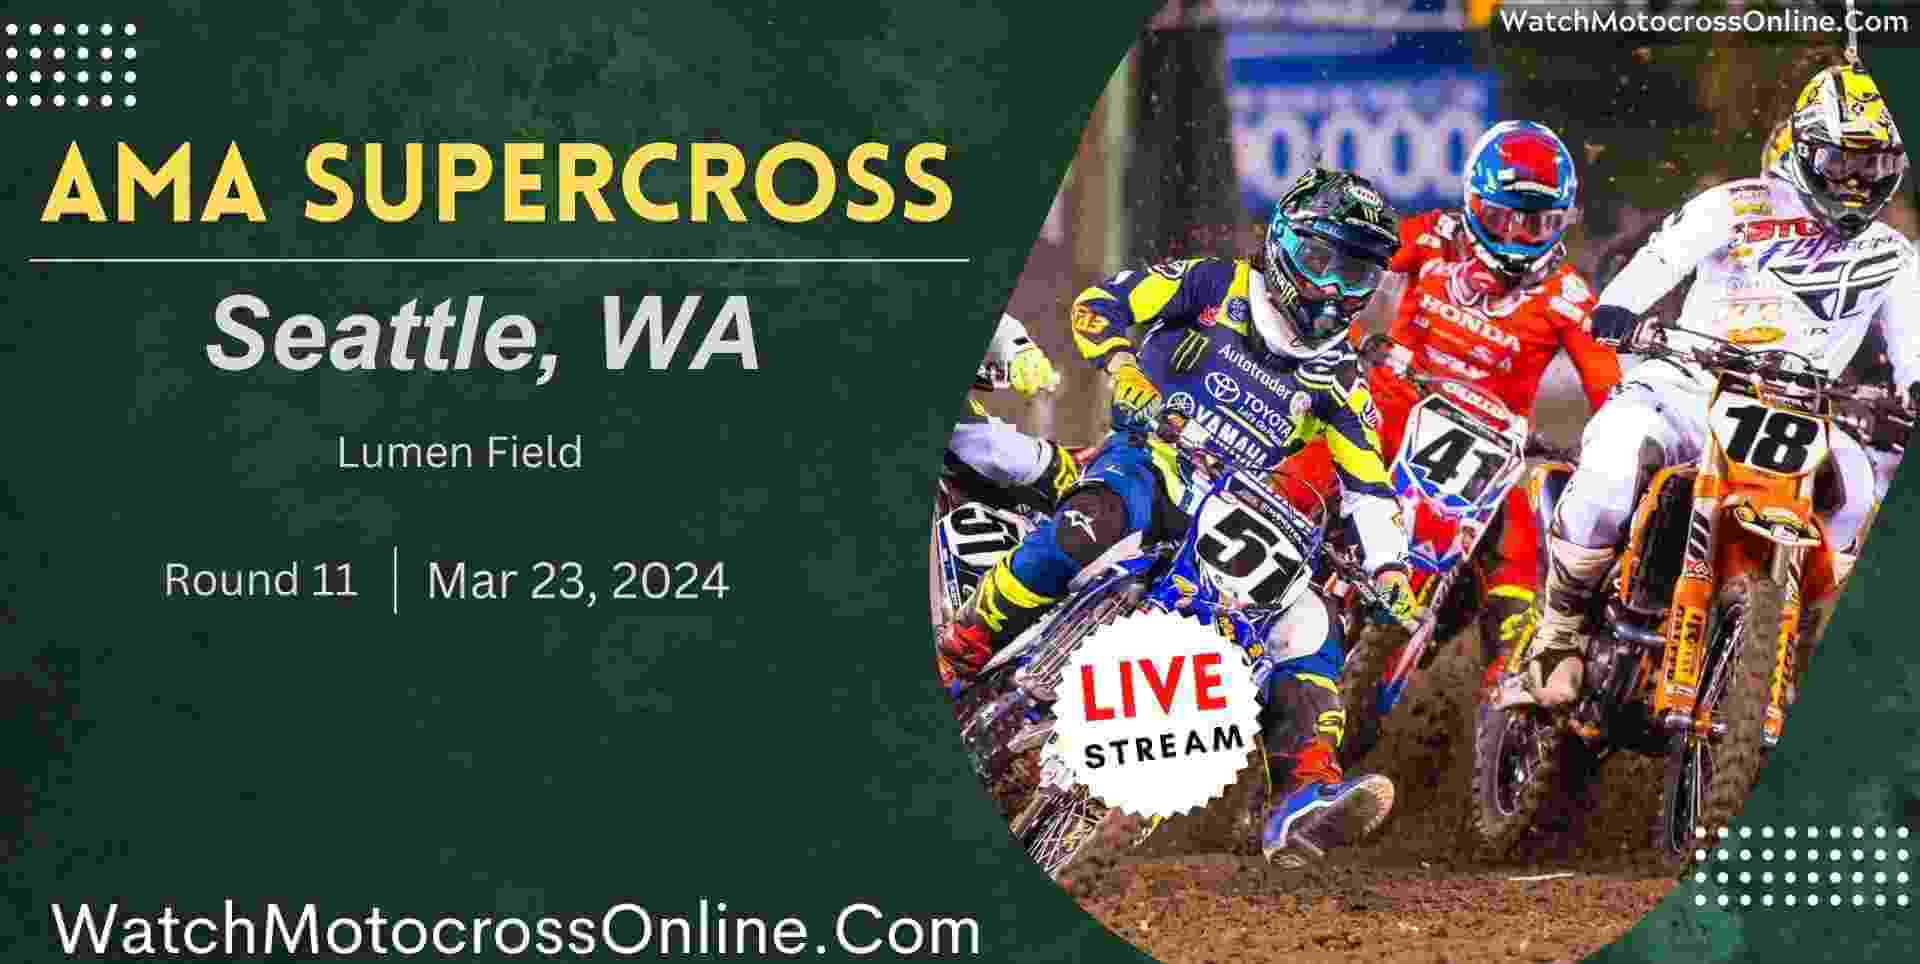 AMA Supercross Seattle Live Stream 2024 Round 11